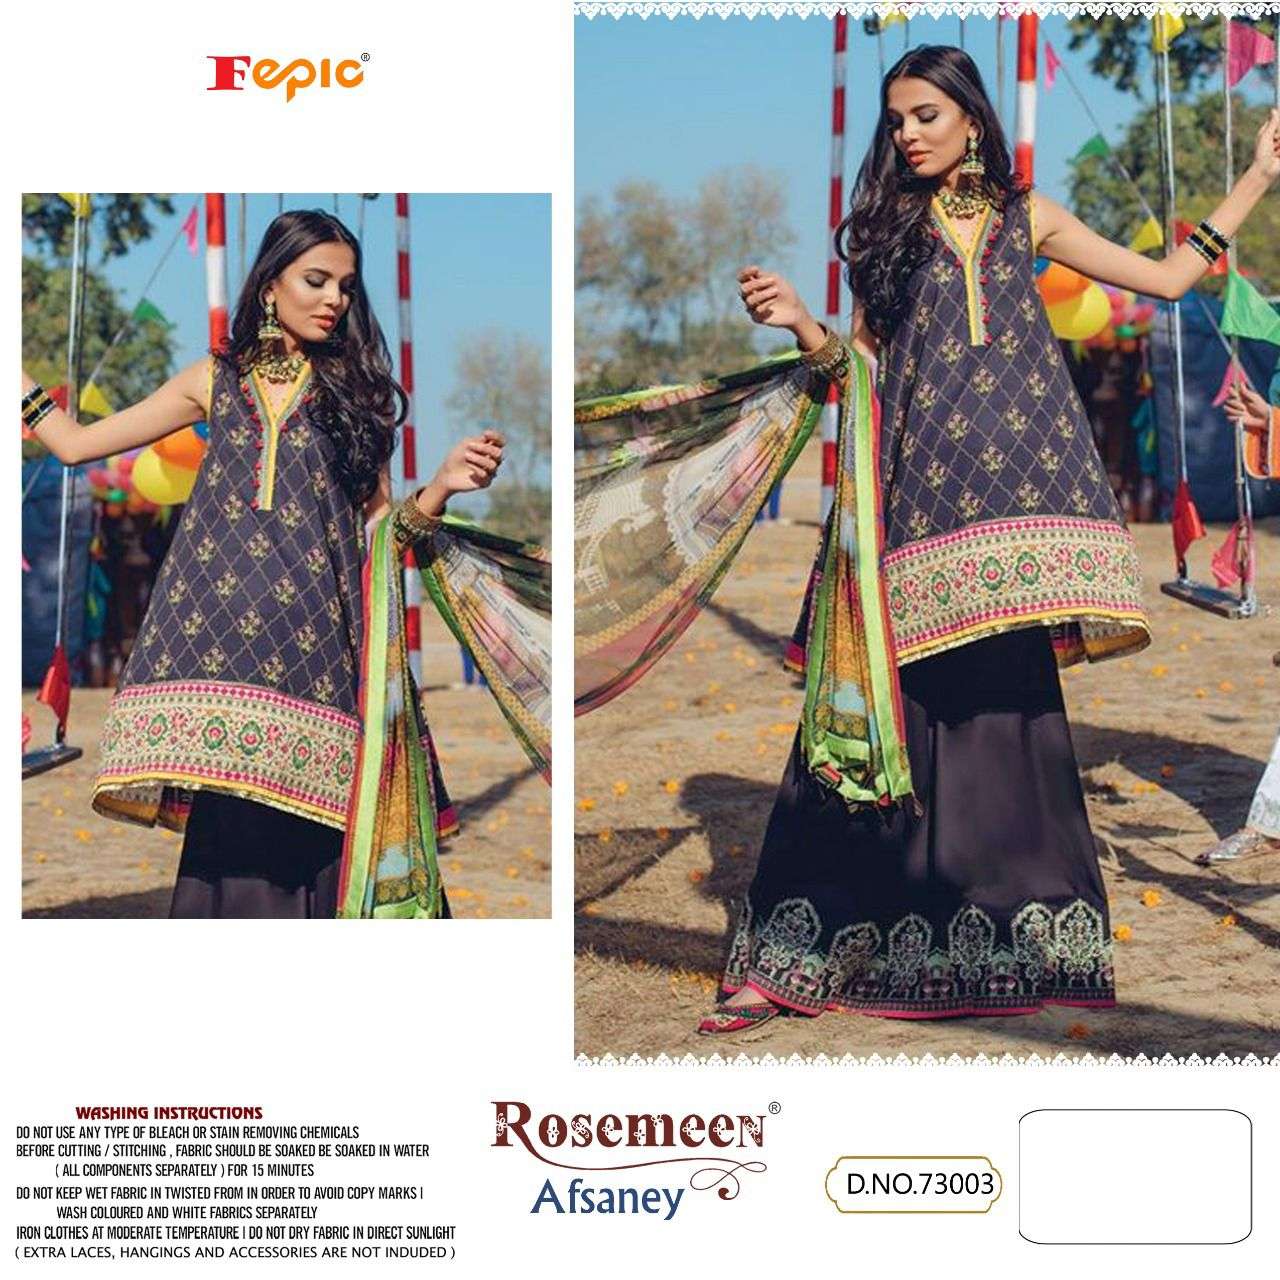 fepic rosemeen afsaney 73001-73007 series pakistani suits catalogue online supplier surat